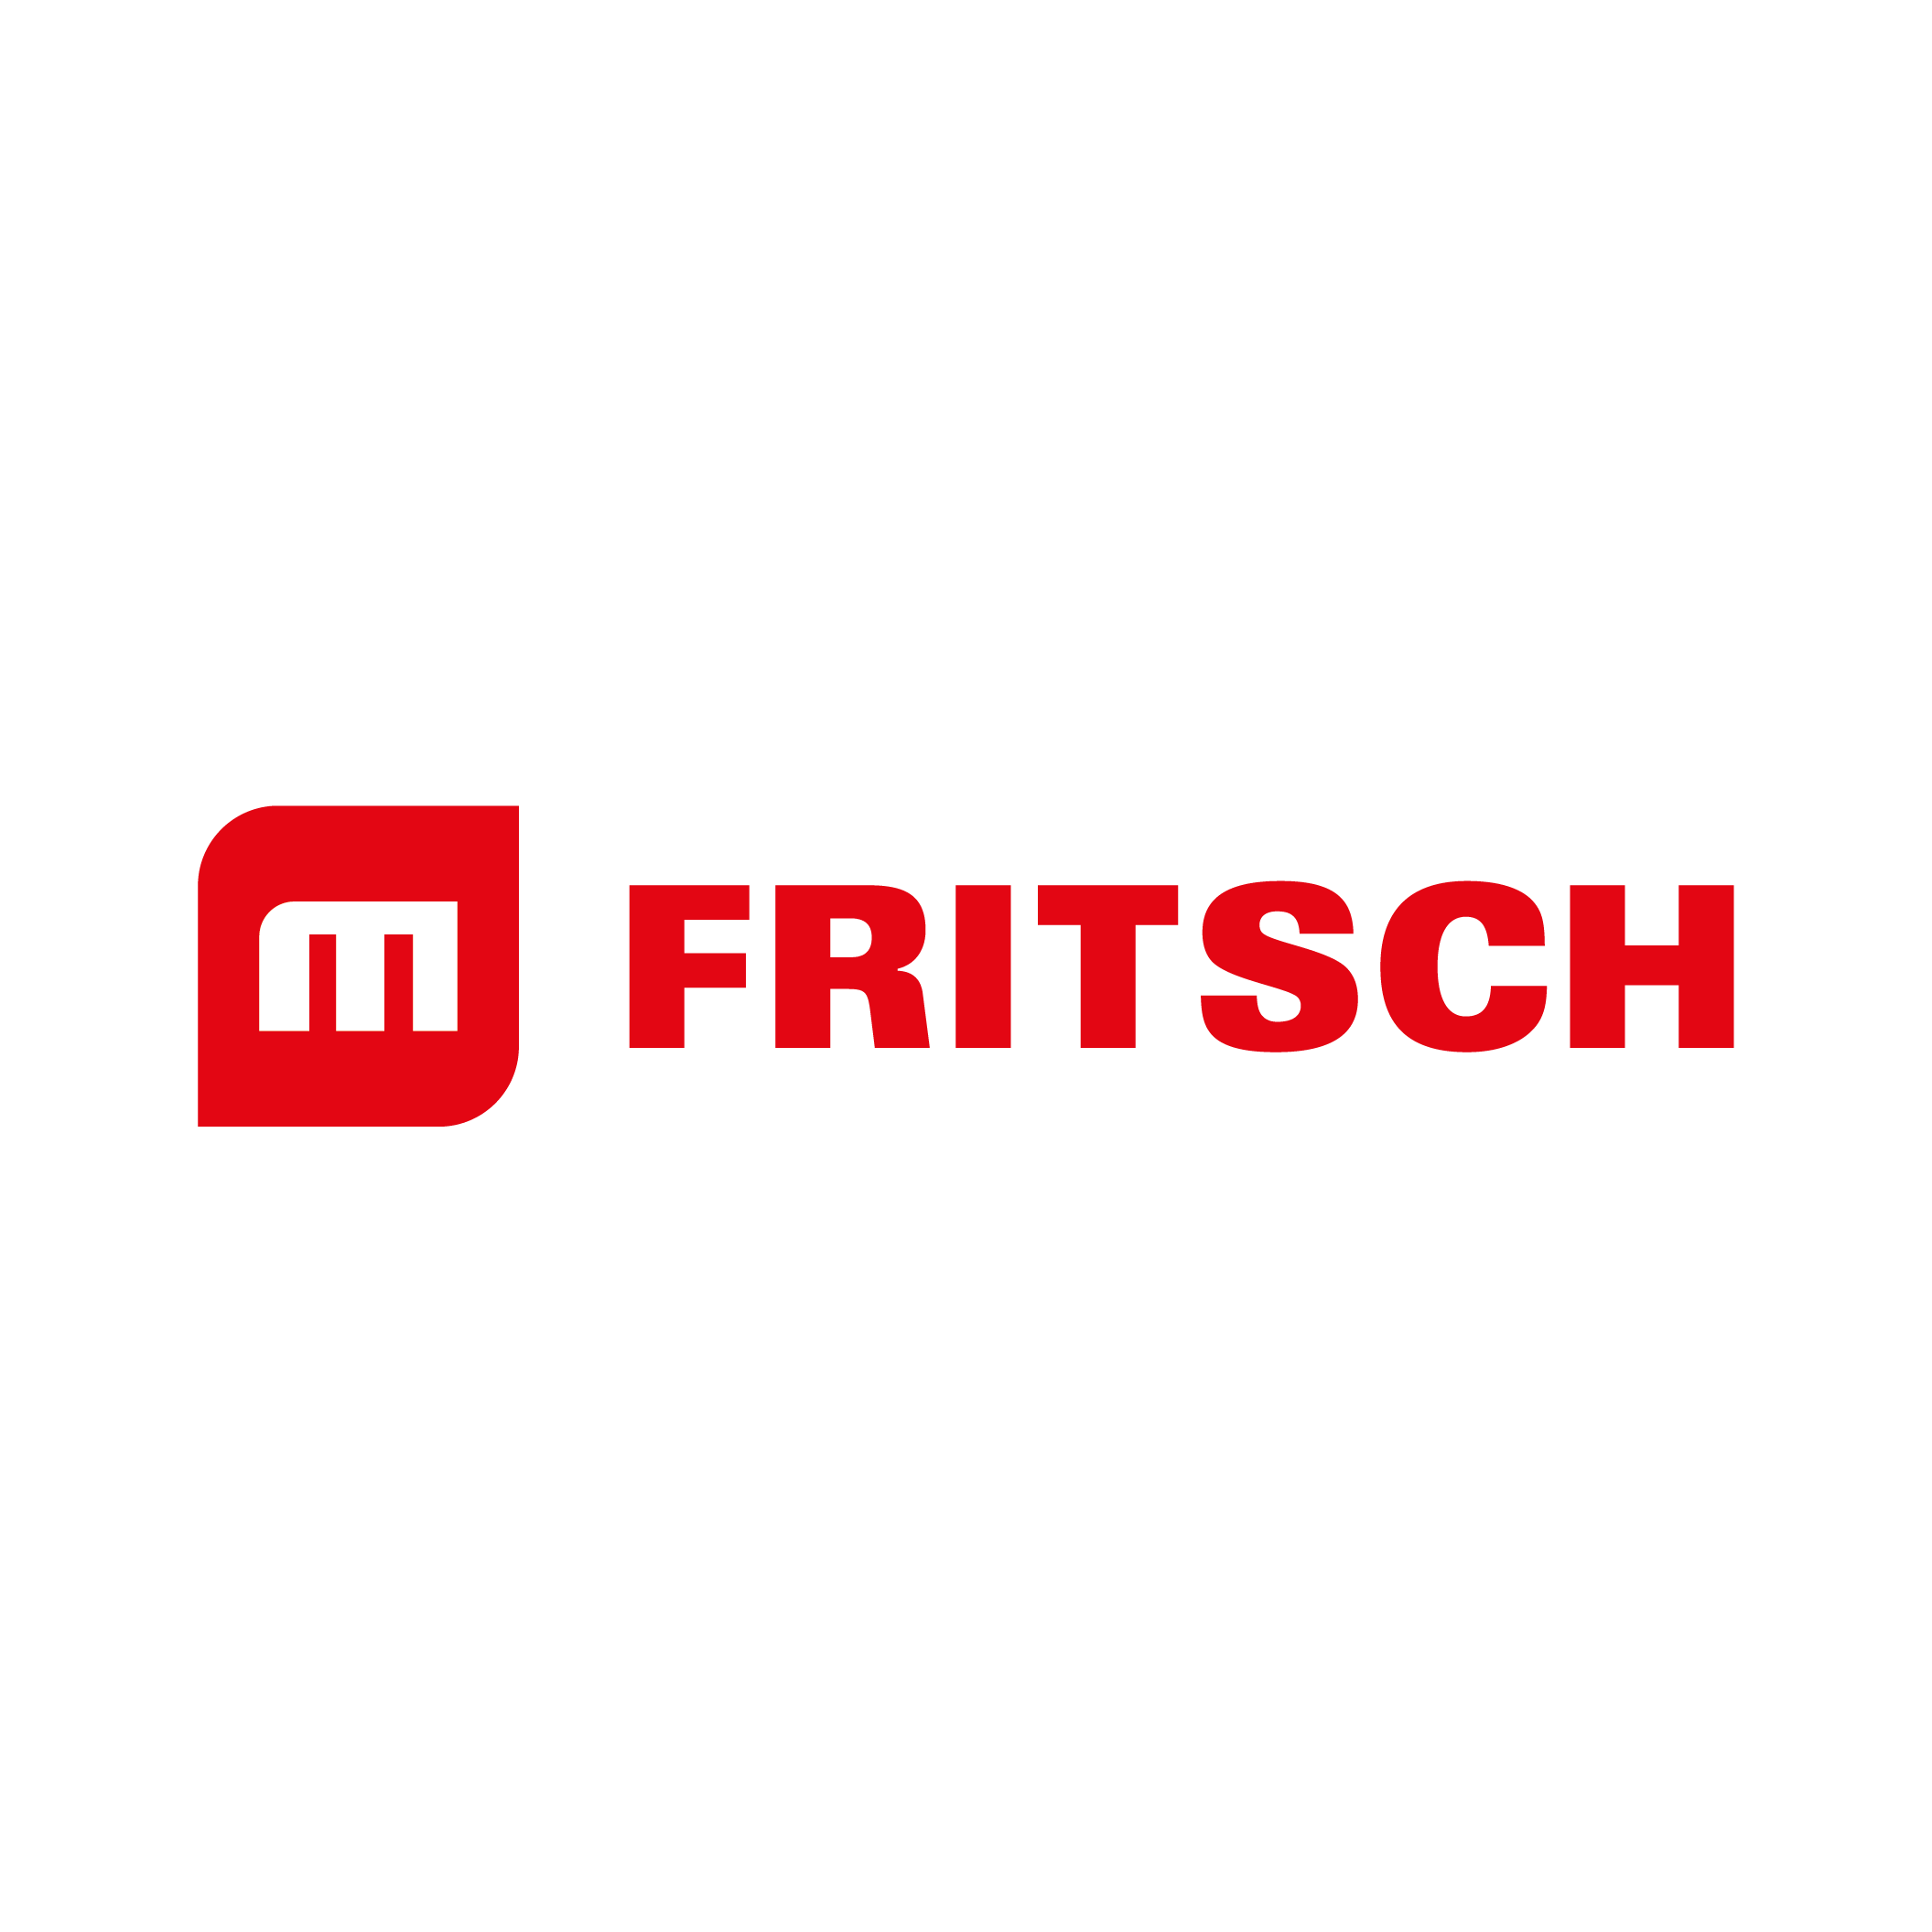 FRITSCH Bakery Solutions Logo